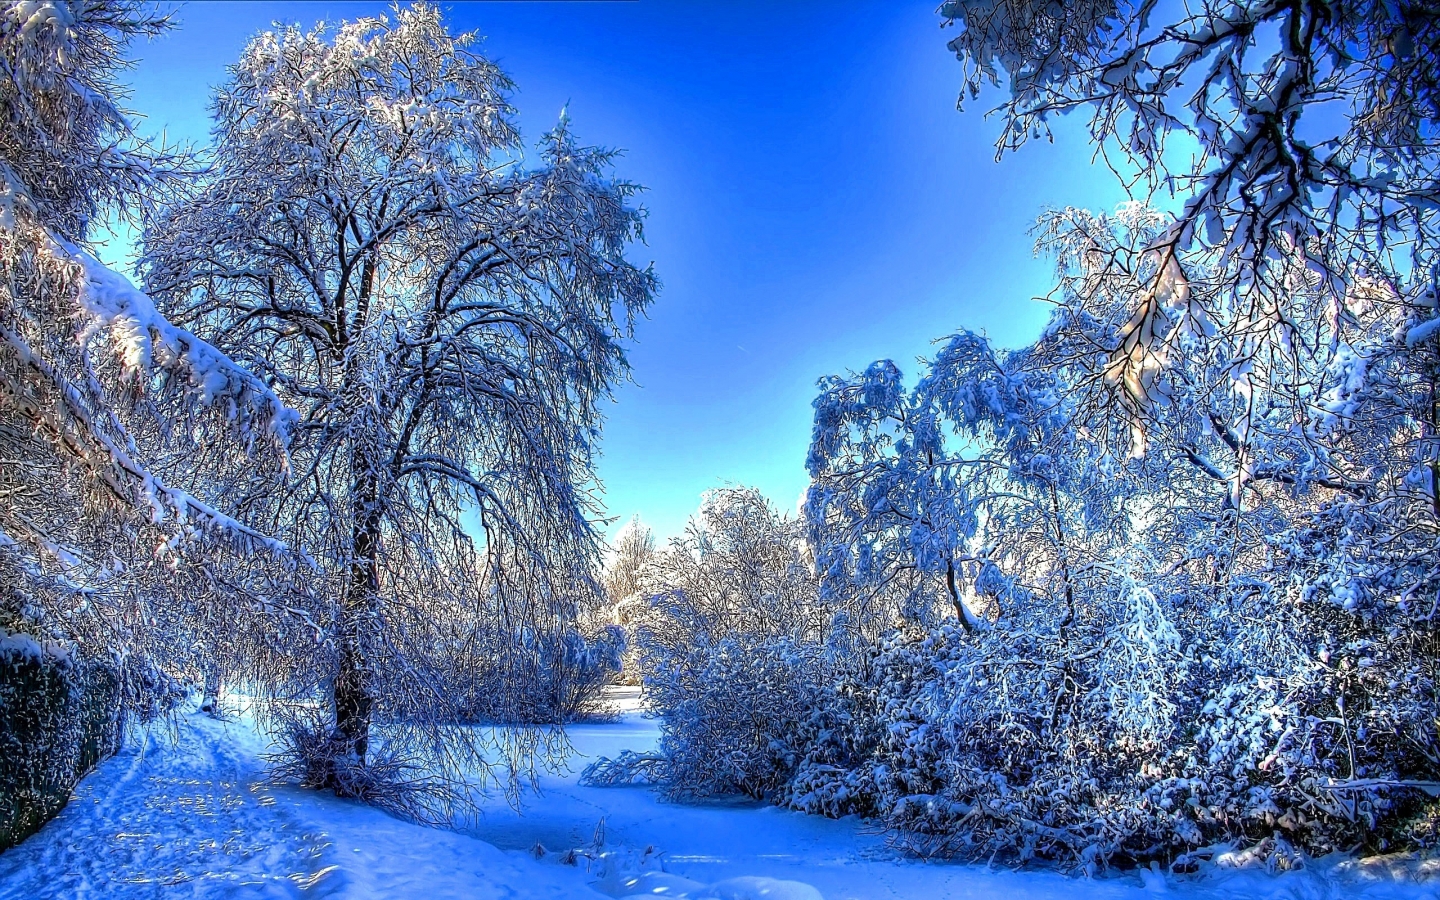 Winter Snow Landscape for 1440 x 900 widescreen resolution